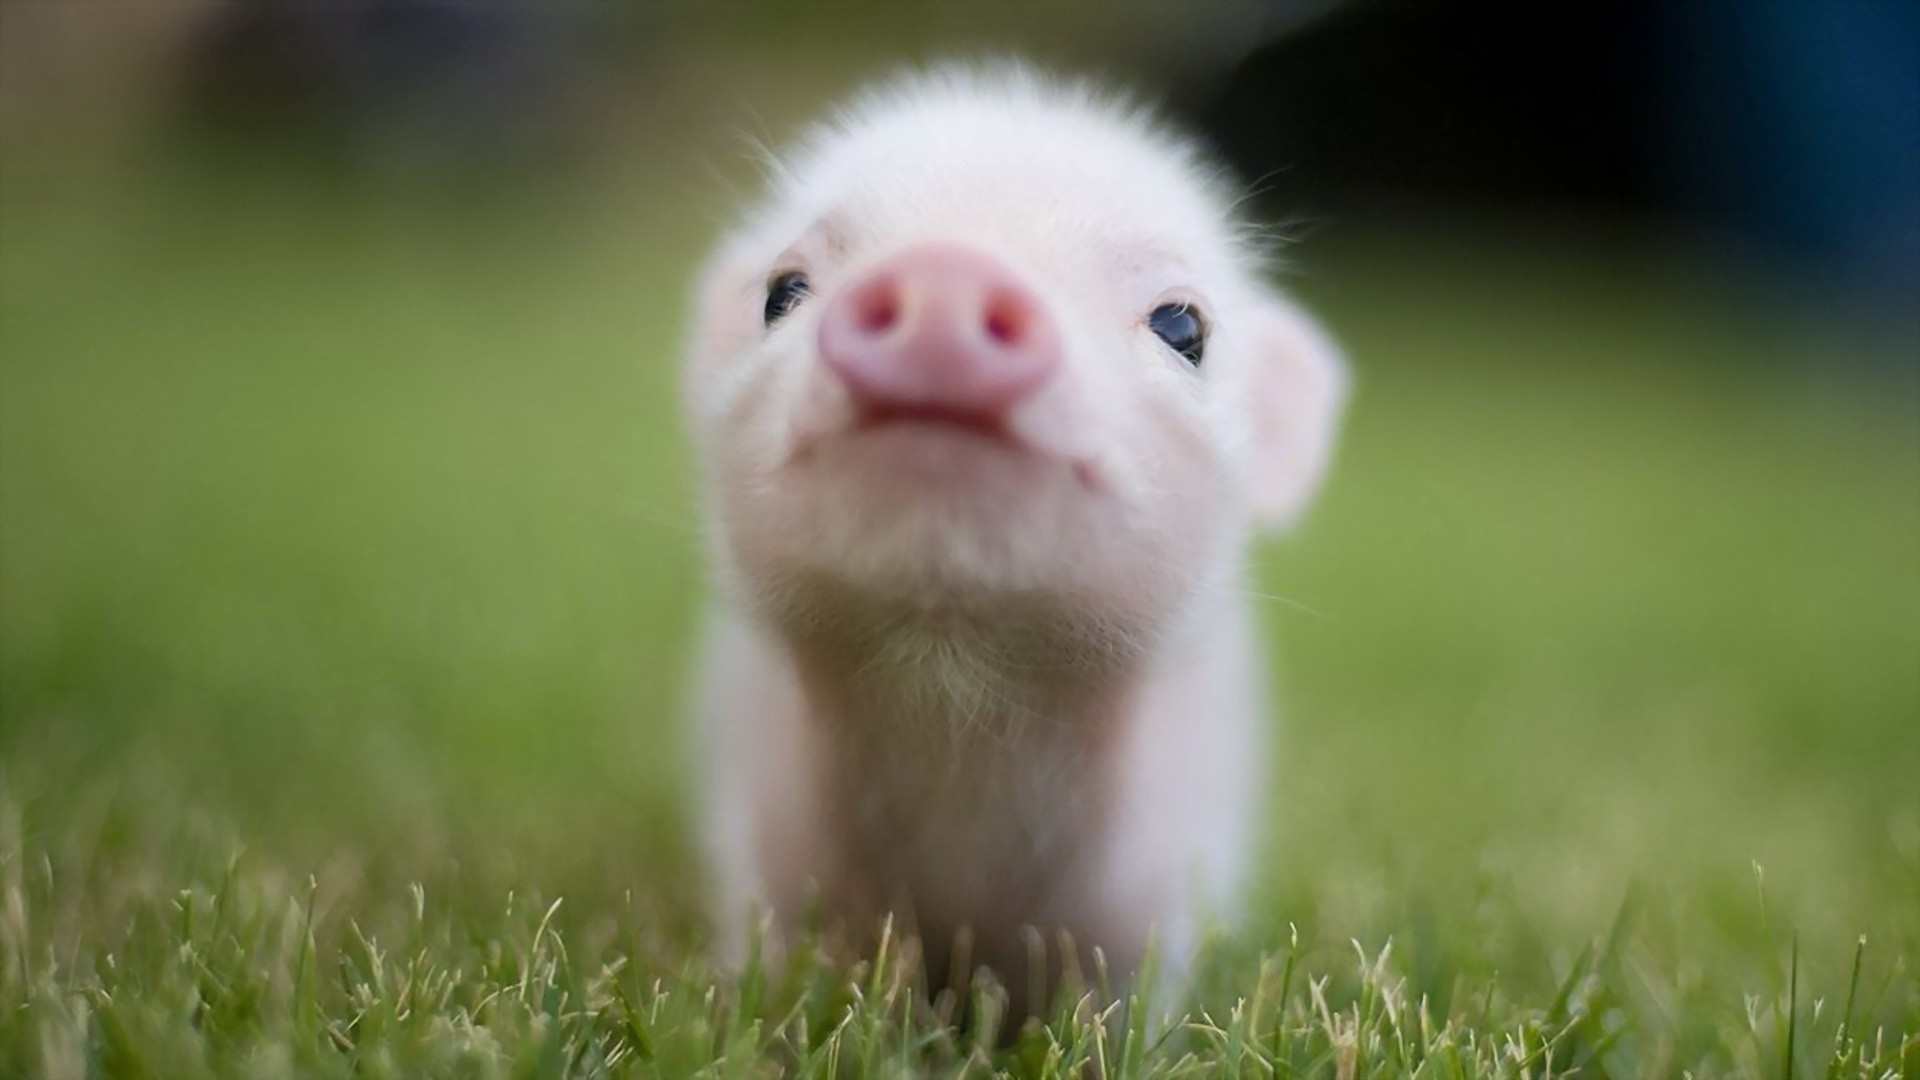 pigs, baby, animals, grass